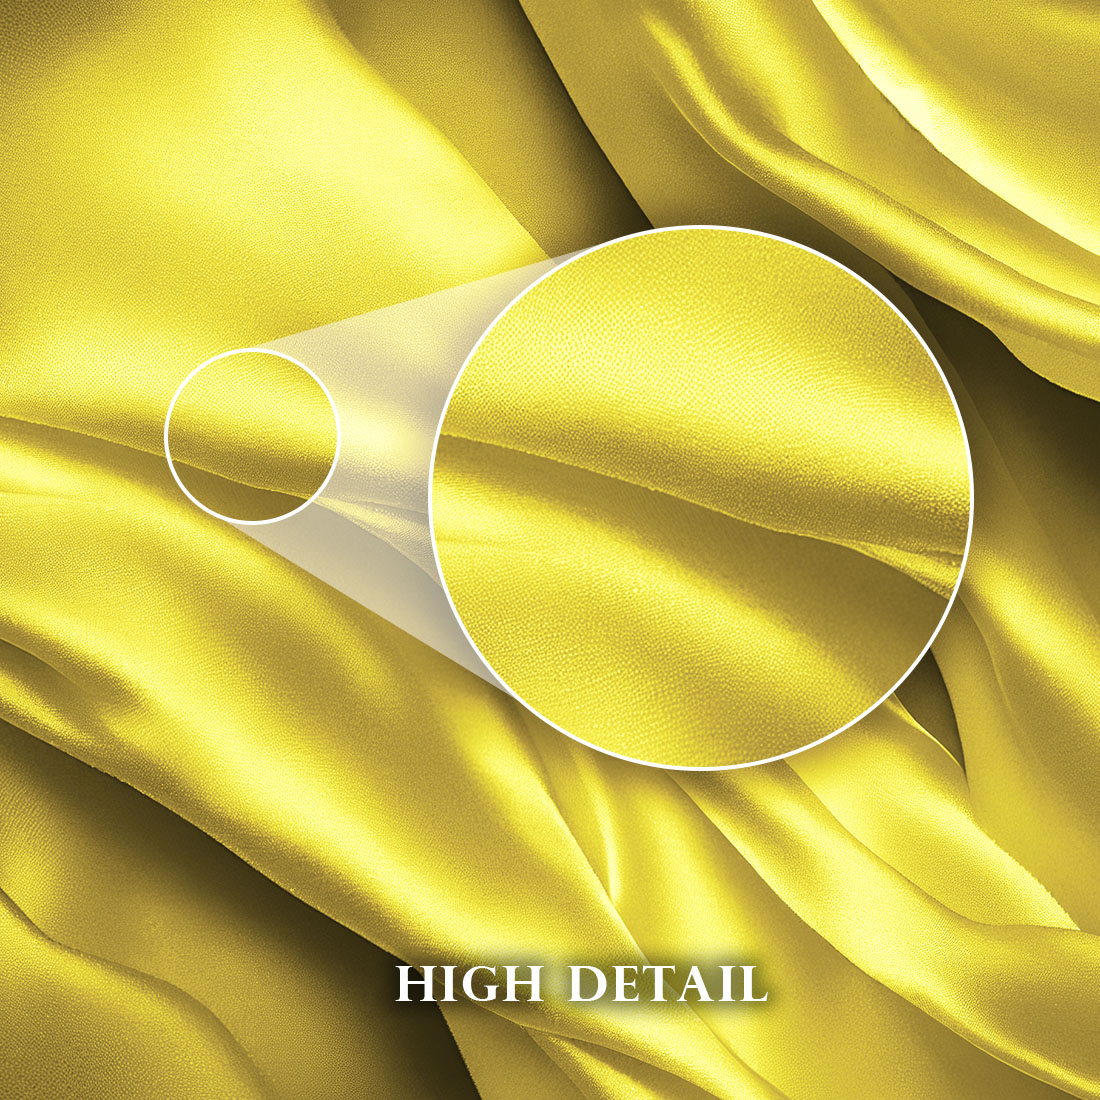 Image with beautiful yellow silk background.